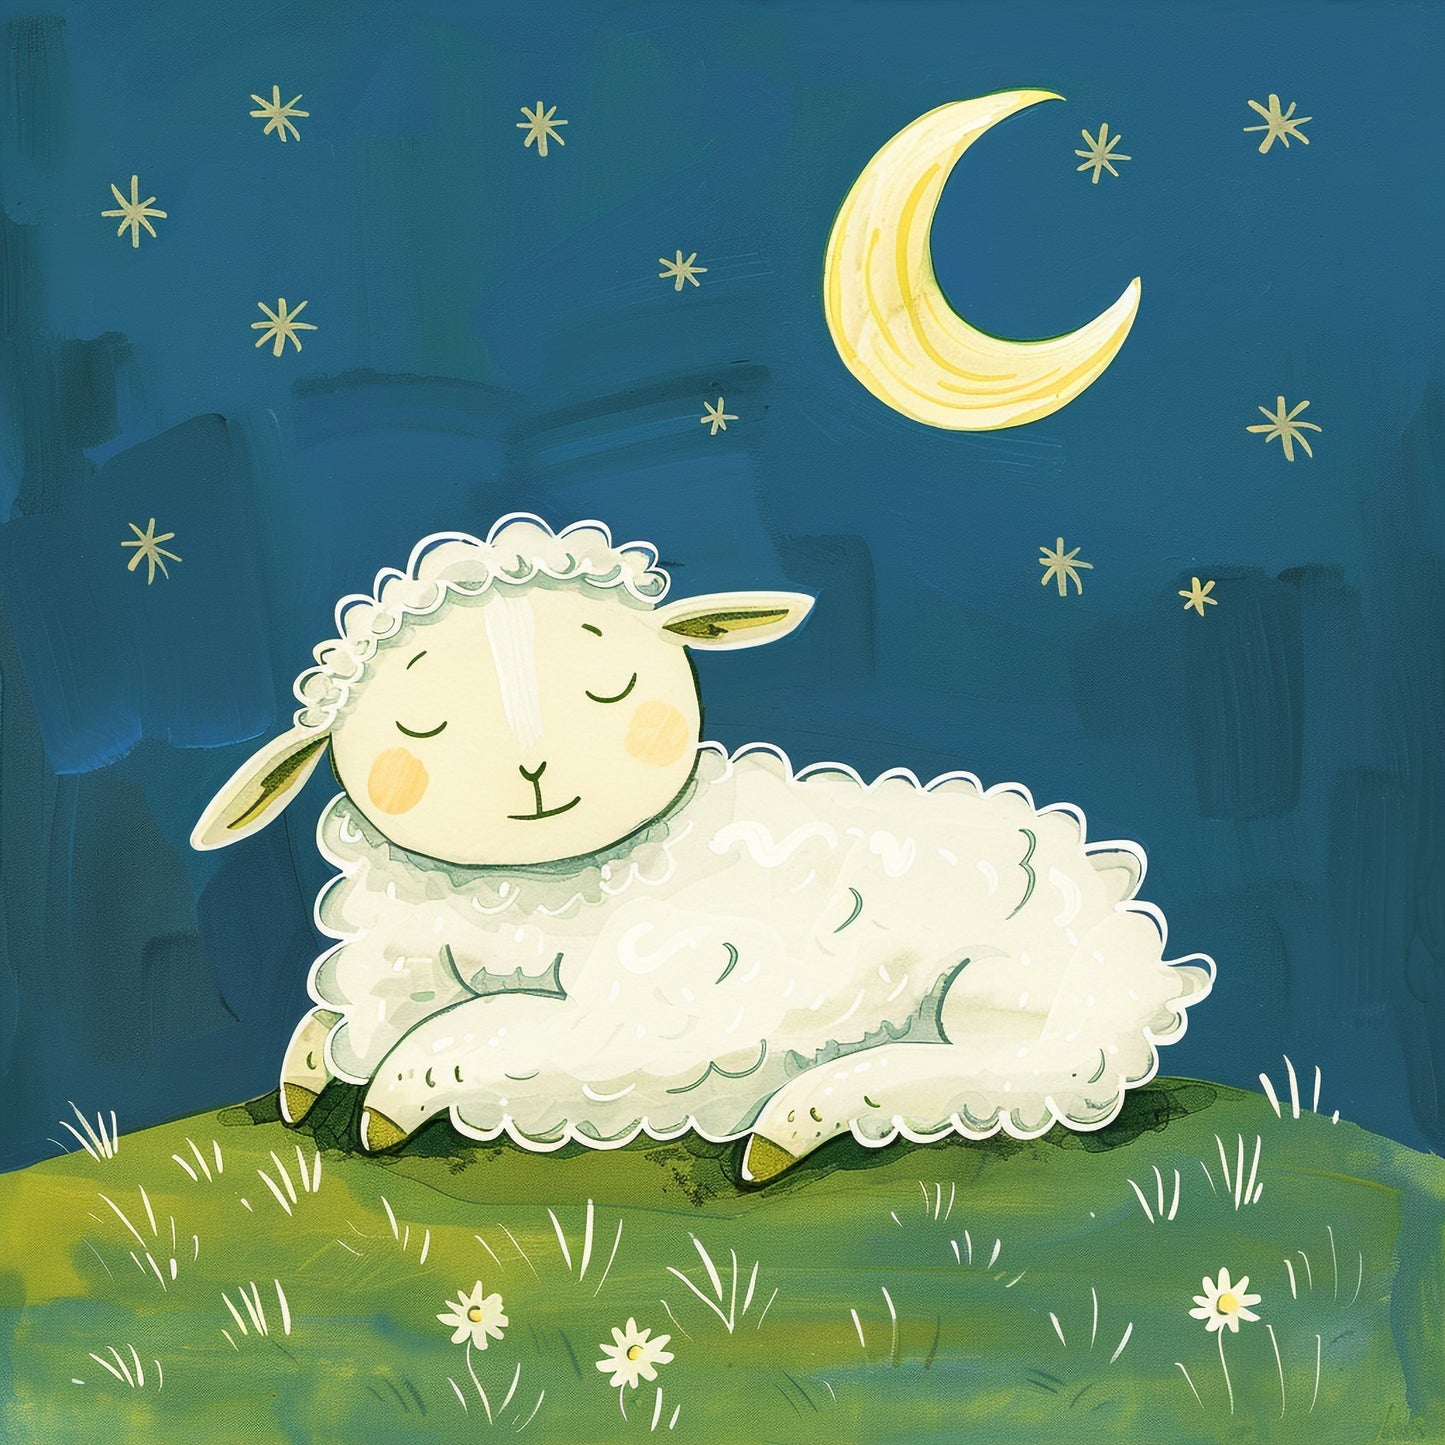 Sleepy Sheep Under a Starry Night Sky Illustration